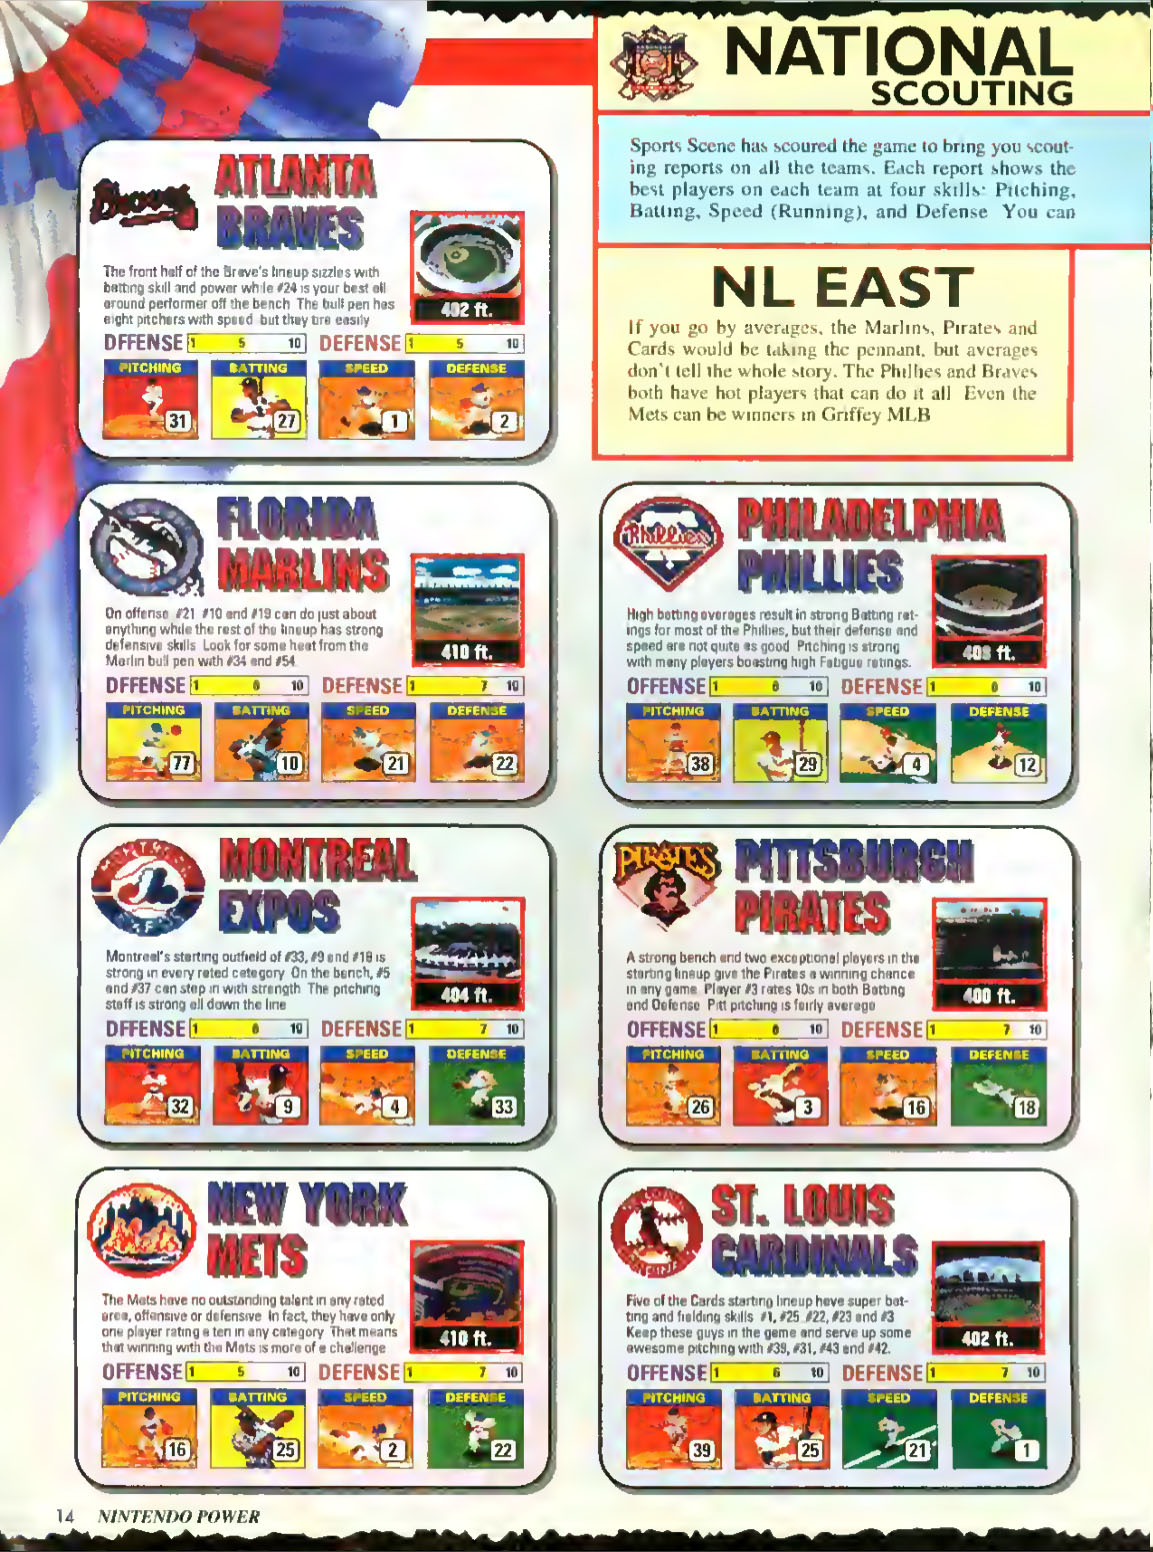 Ken Griffey Jr. Presents Major League Baseball, Nintendo Power April 1994 page 15